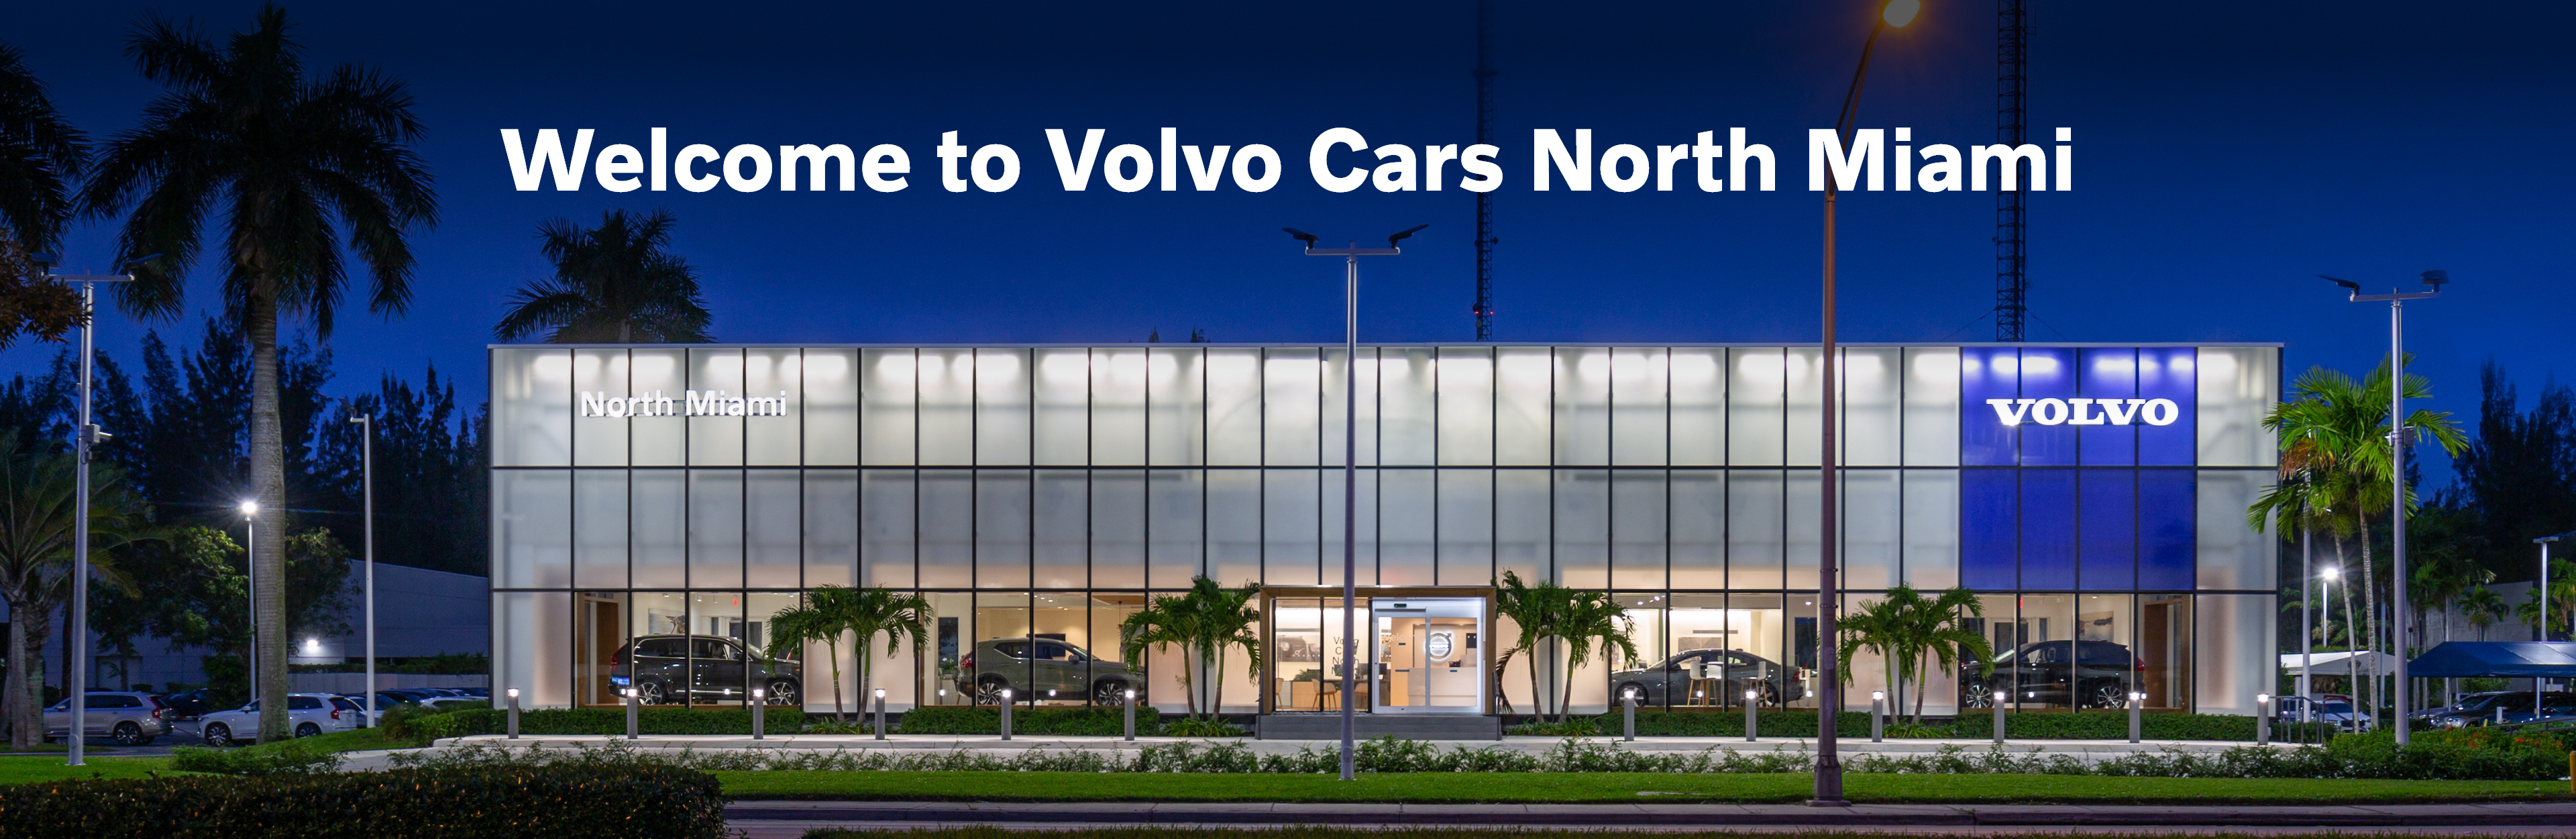 Exterior local Volvo car dealer near Hollywood, Florida at Volvo Cars North Miami